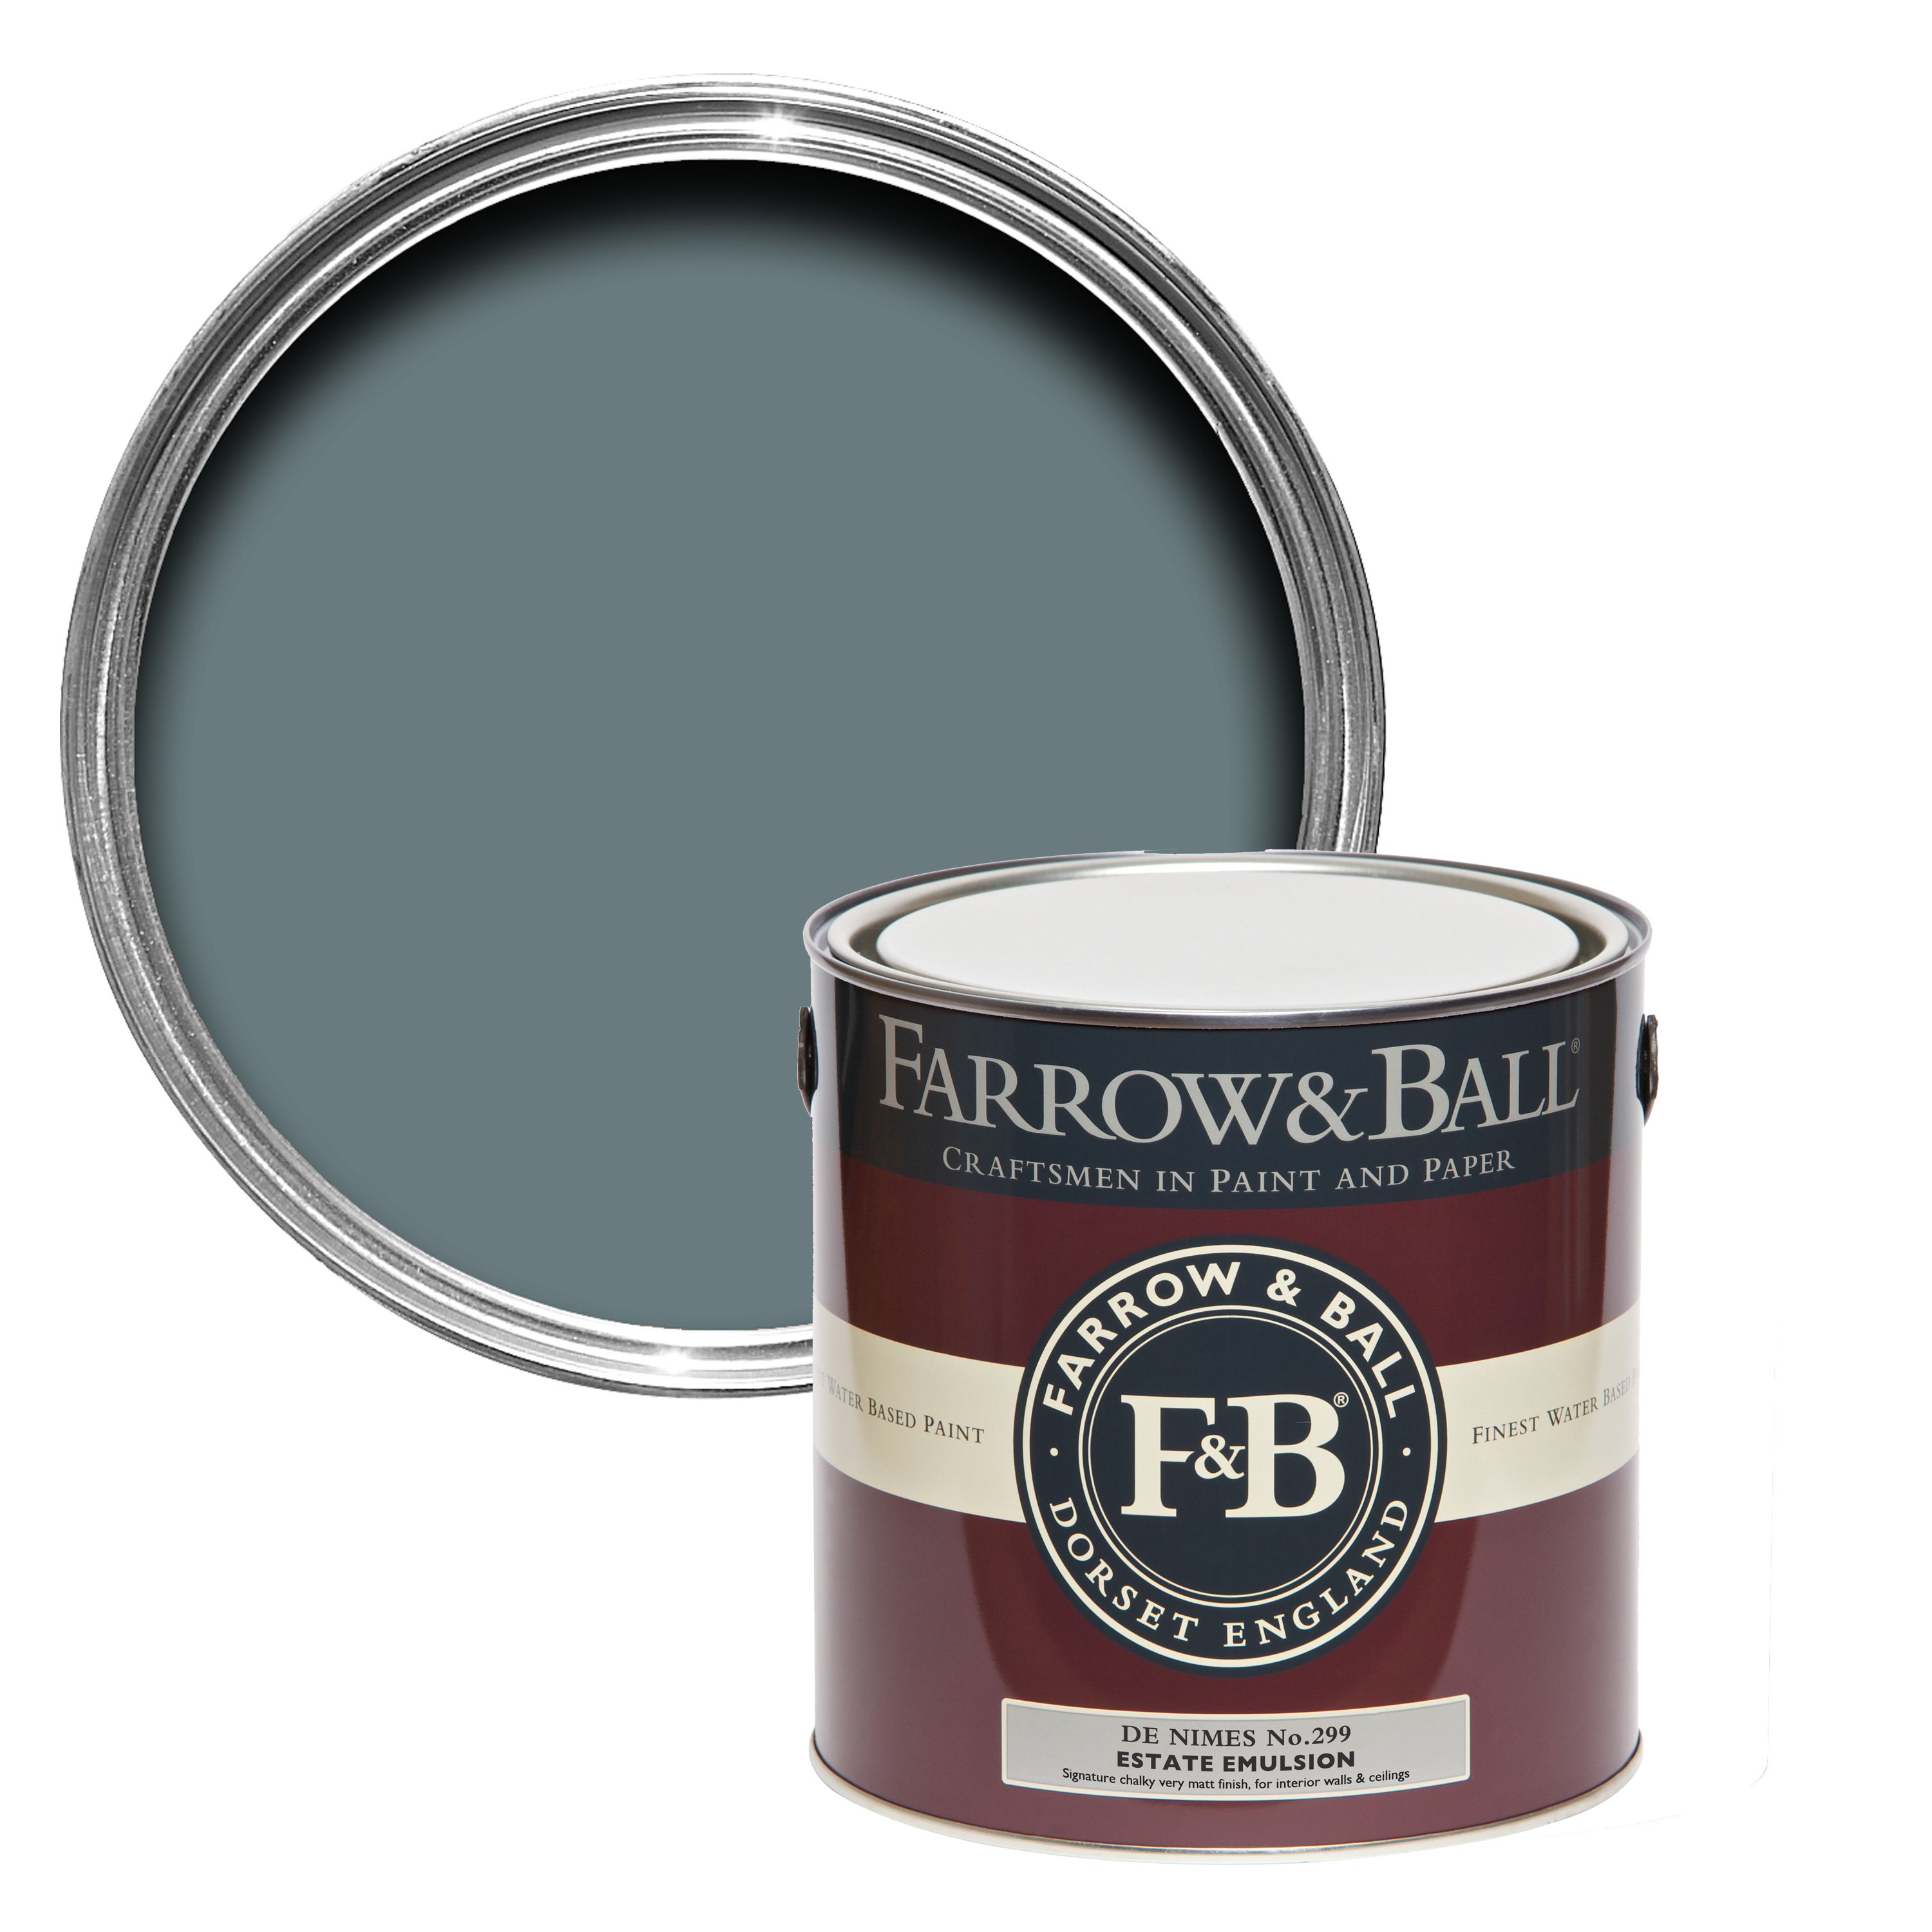 Farrow & Ball Estate De nimes No.299 Matt Emulsion paint, 2.5L